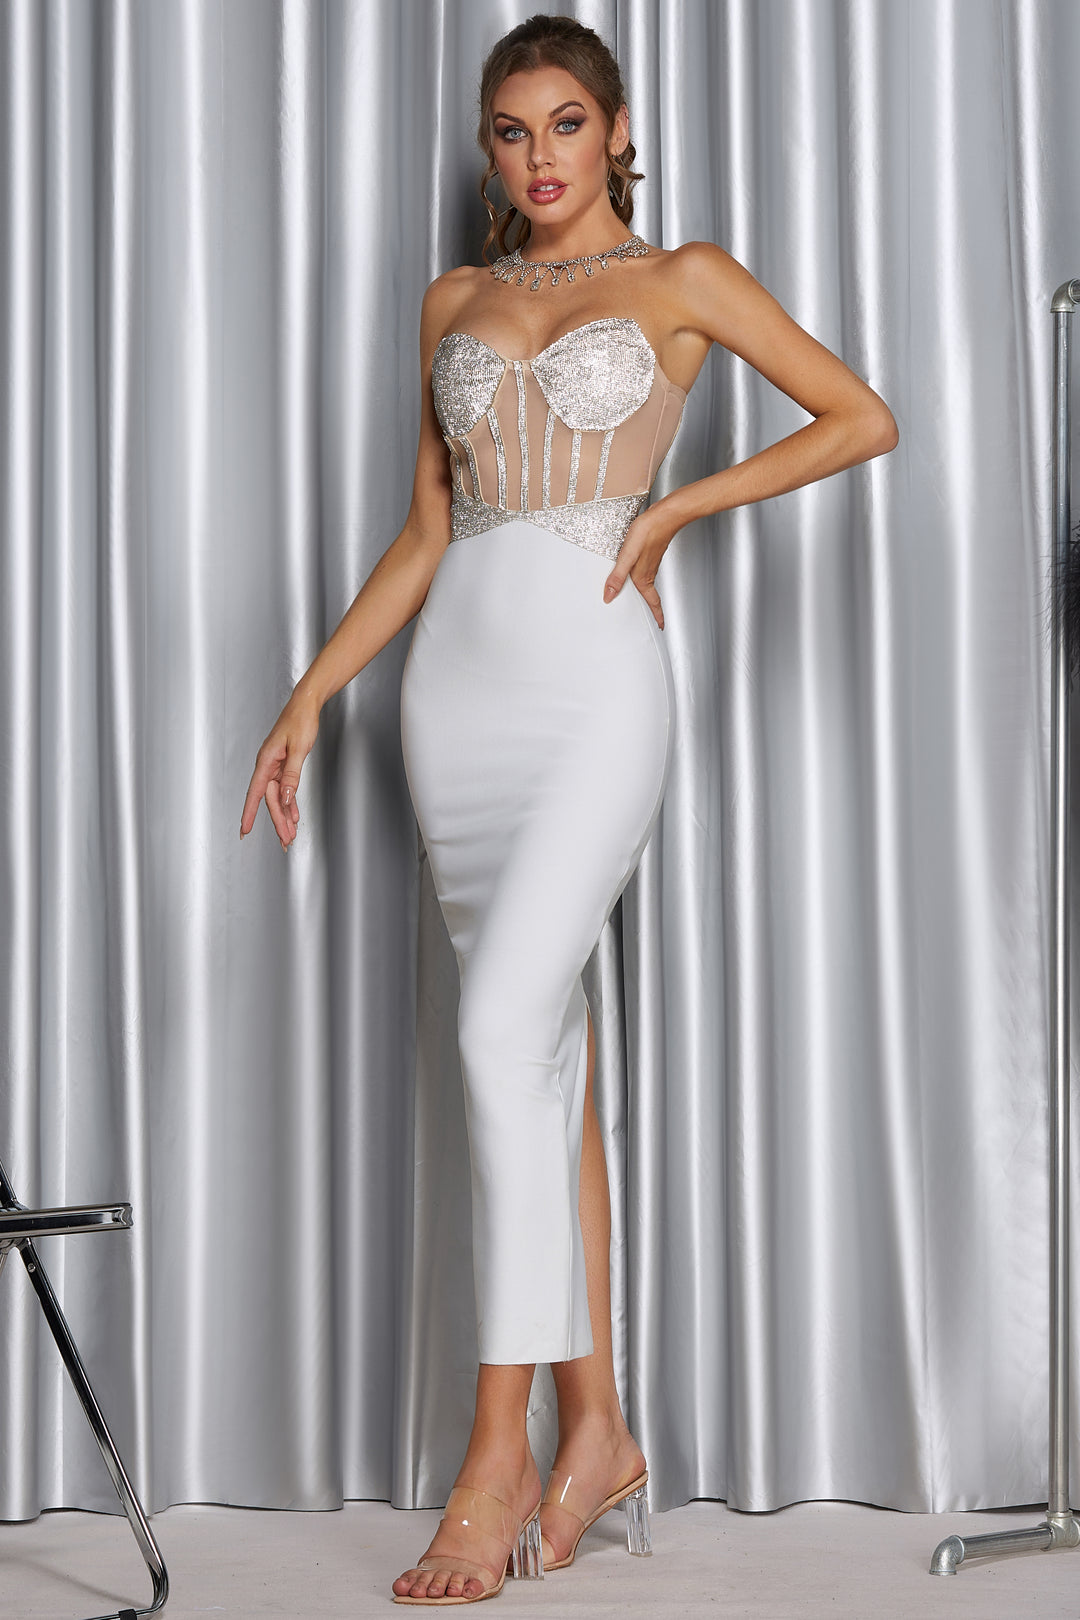 Briarrose Strapless White Dress